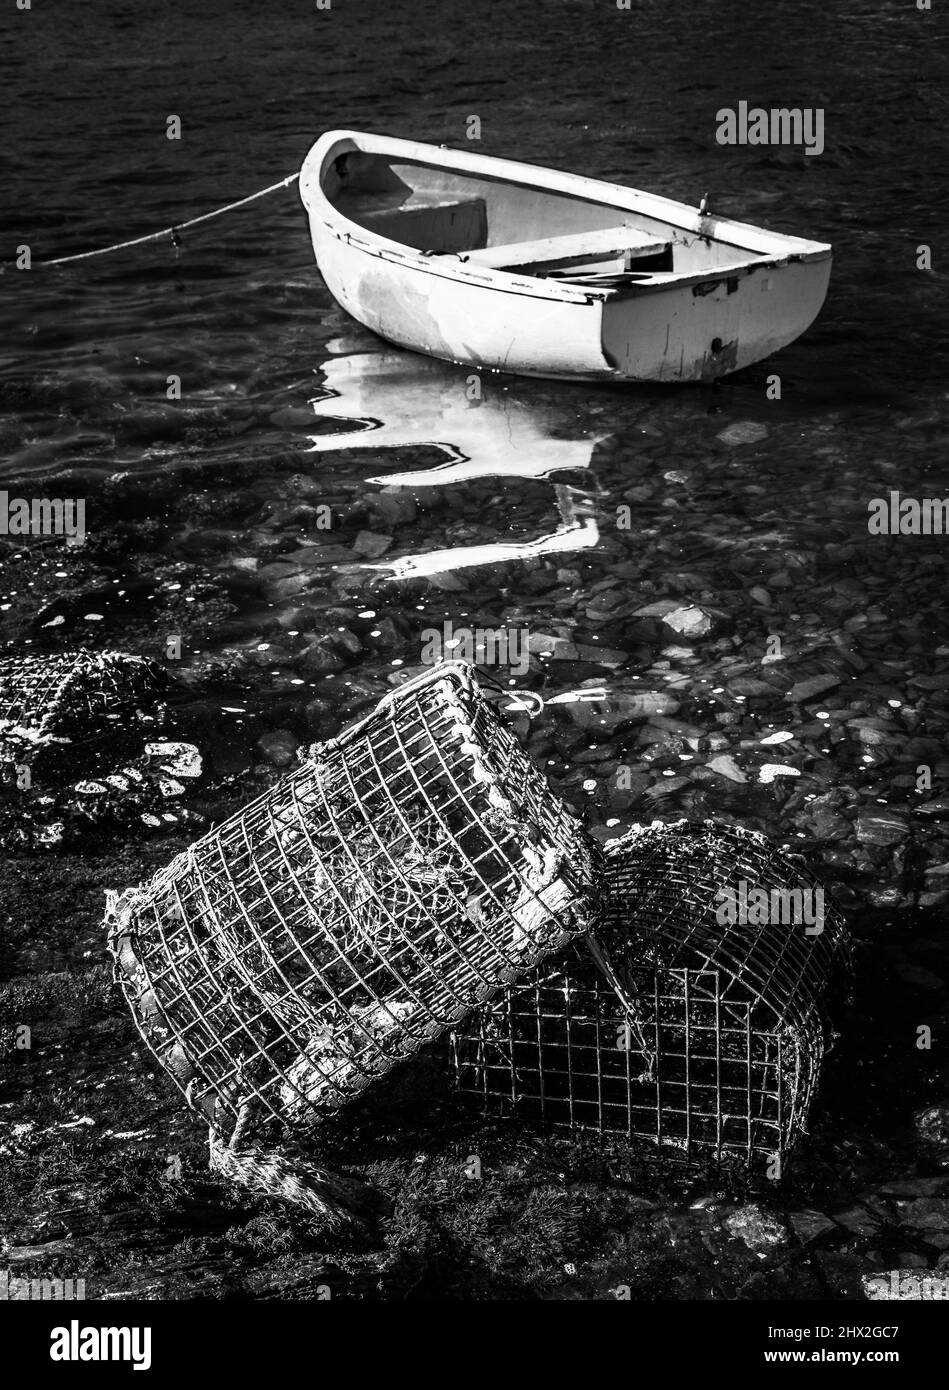 Lobster creels and moored boat on Killary Bay Little, Connemara, County Galway, Ireland. Stock Photo